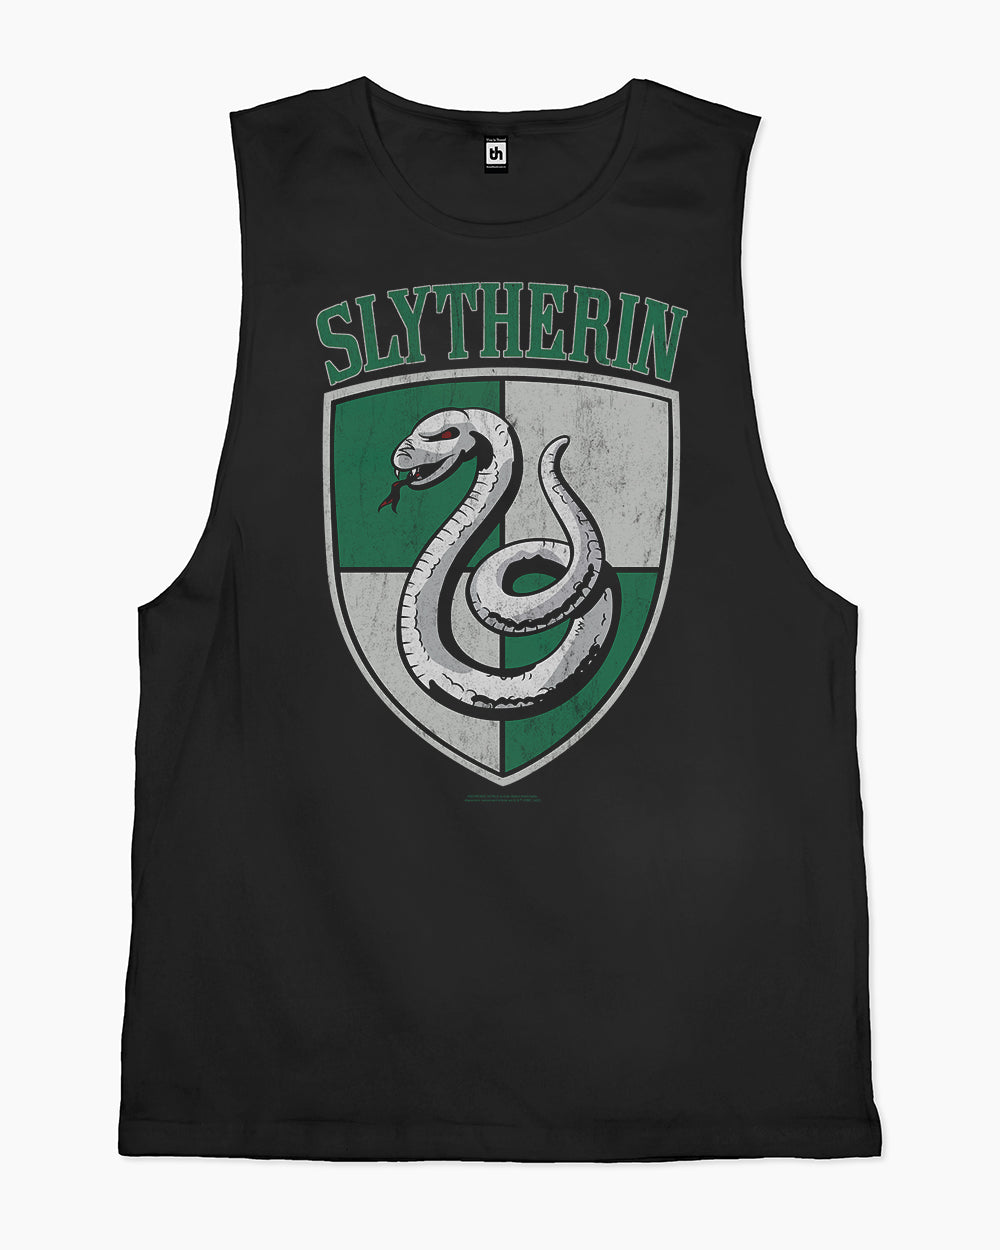 Slytherin Crest Tank, Official Harry Potter Merch